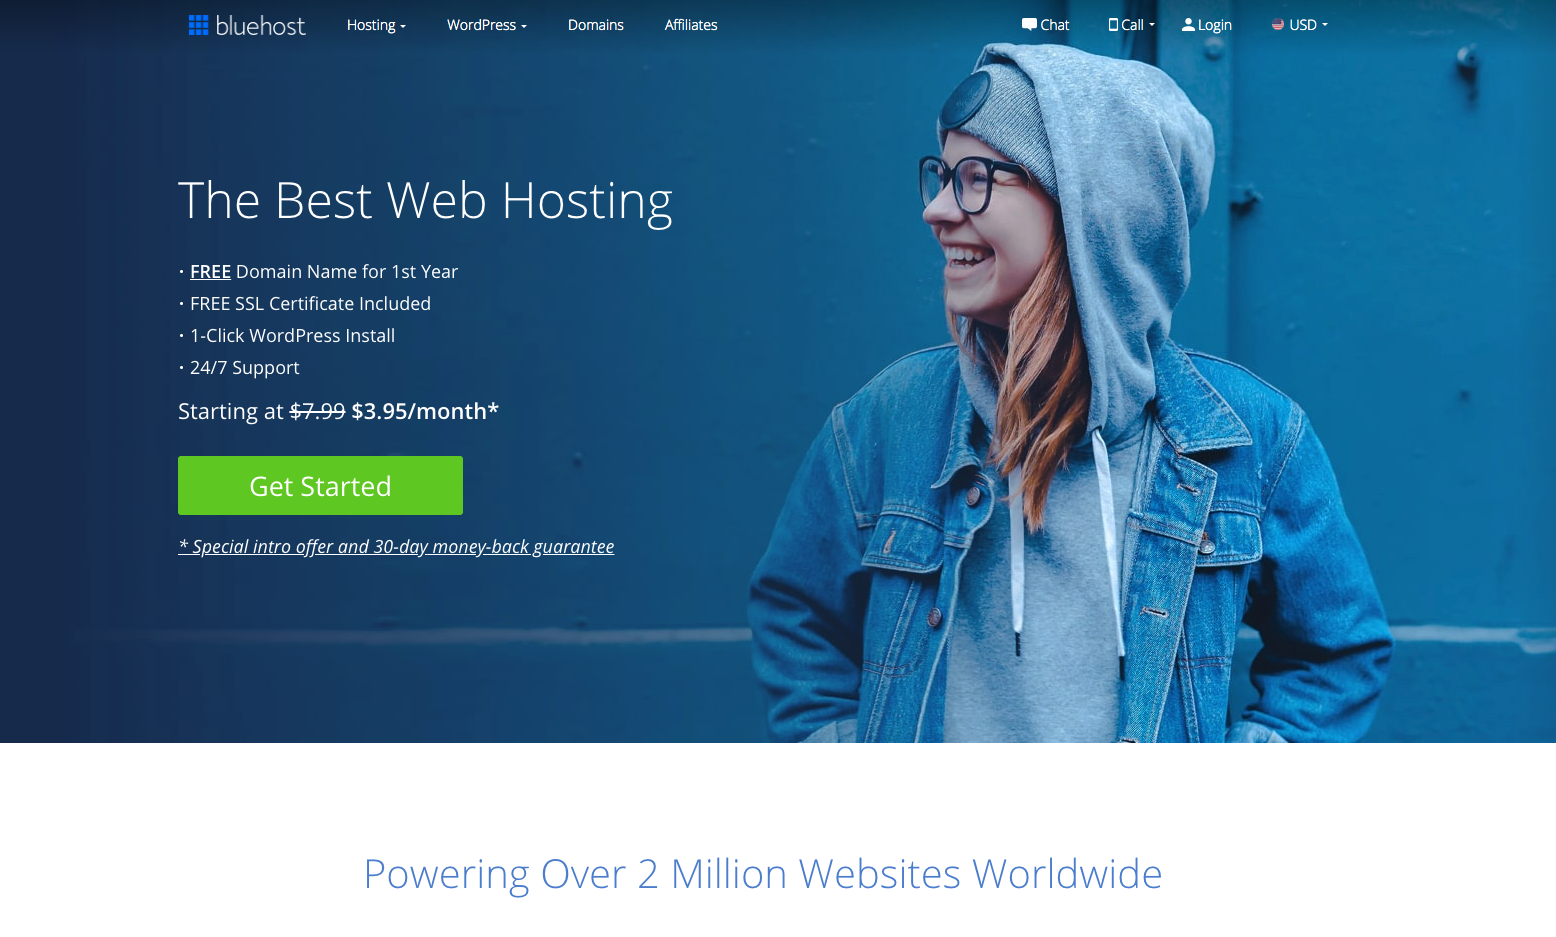 Bluehost webhosting